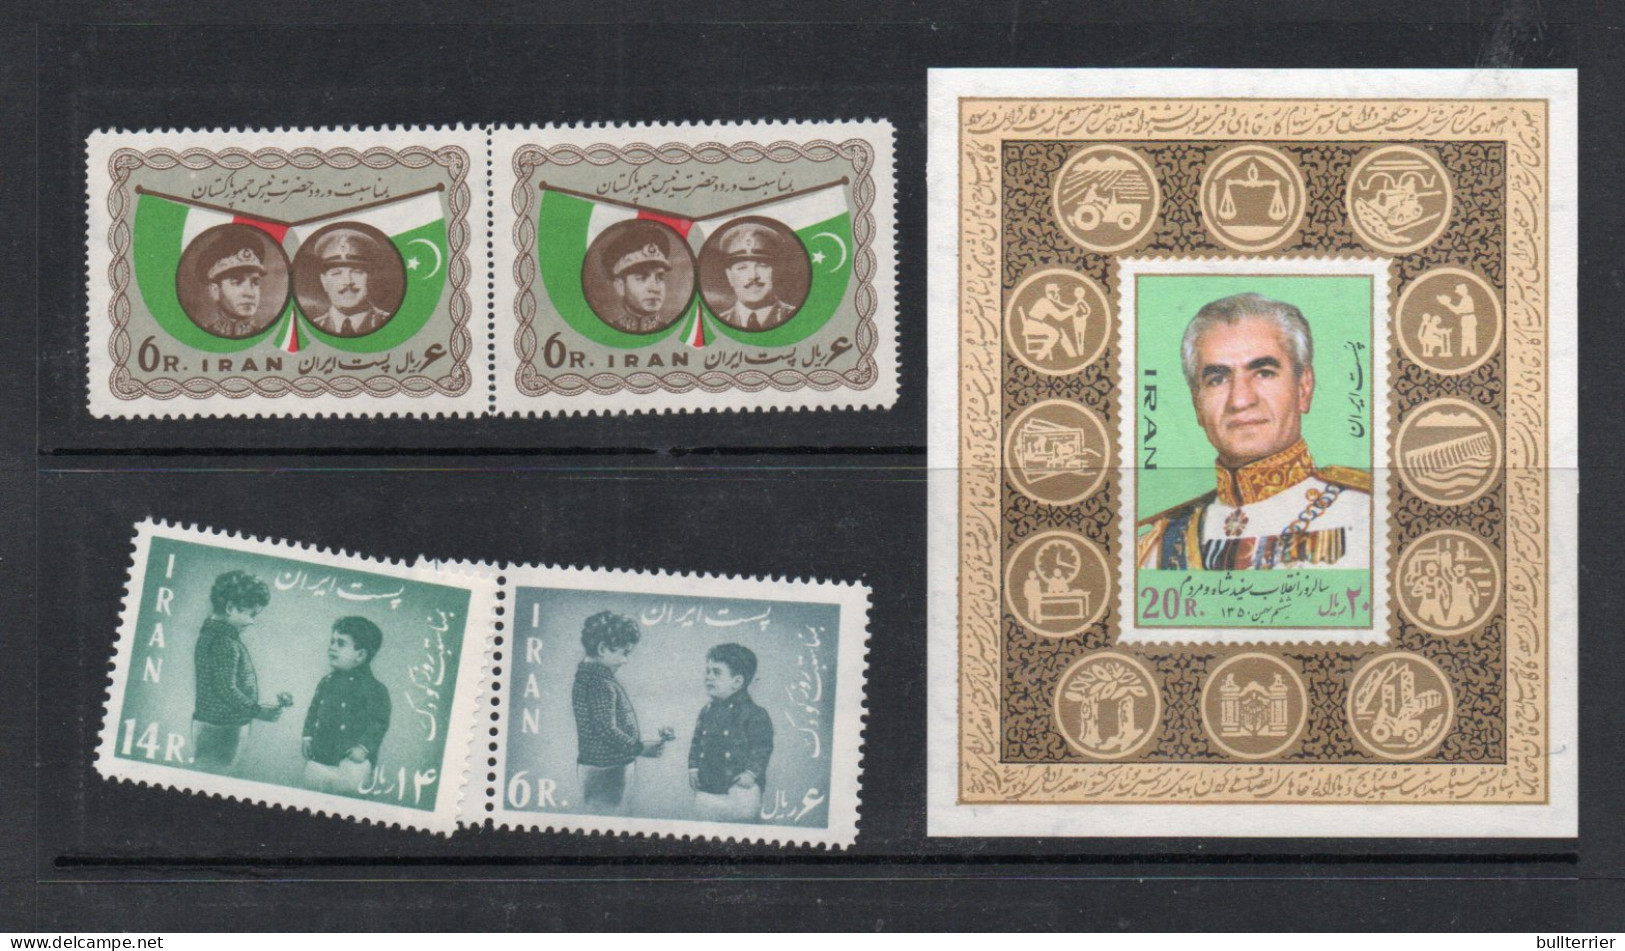 IRAN - 1959 PAKISTAN VISIT,1962 CROWN PRINCE SET, AND 1972 SHAH 9TH ANNIV S/SHEET  MINT NEVER HINGED,  SG £34+ - Irán